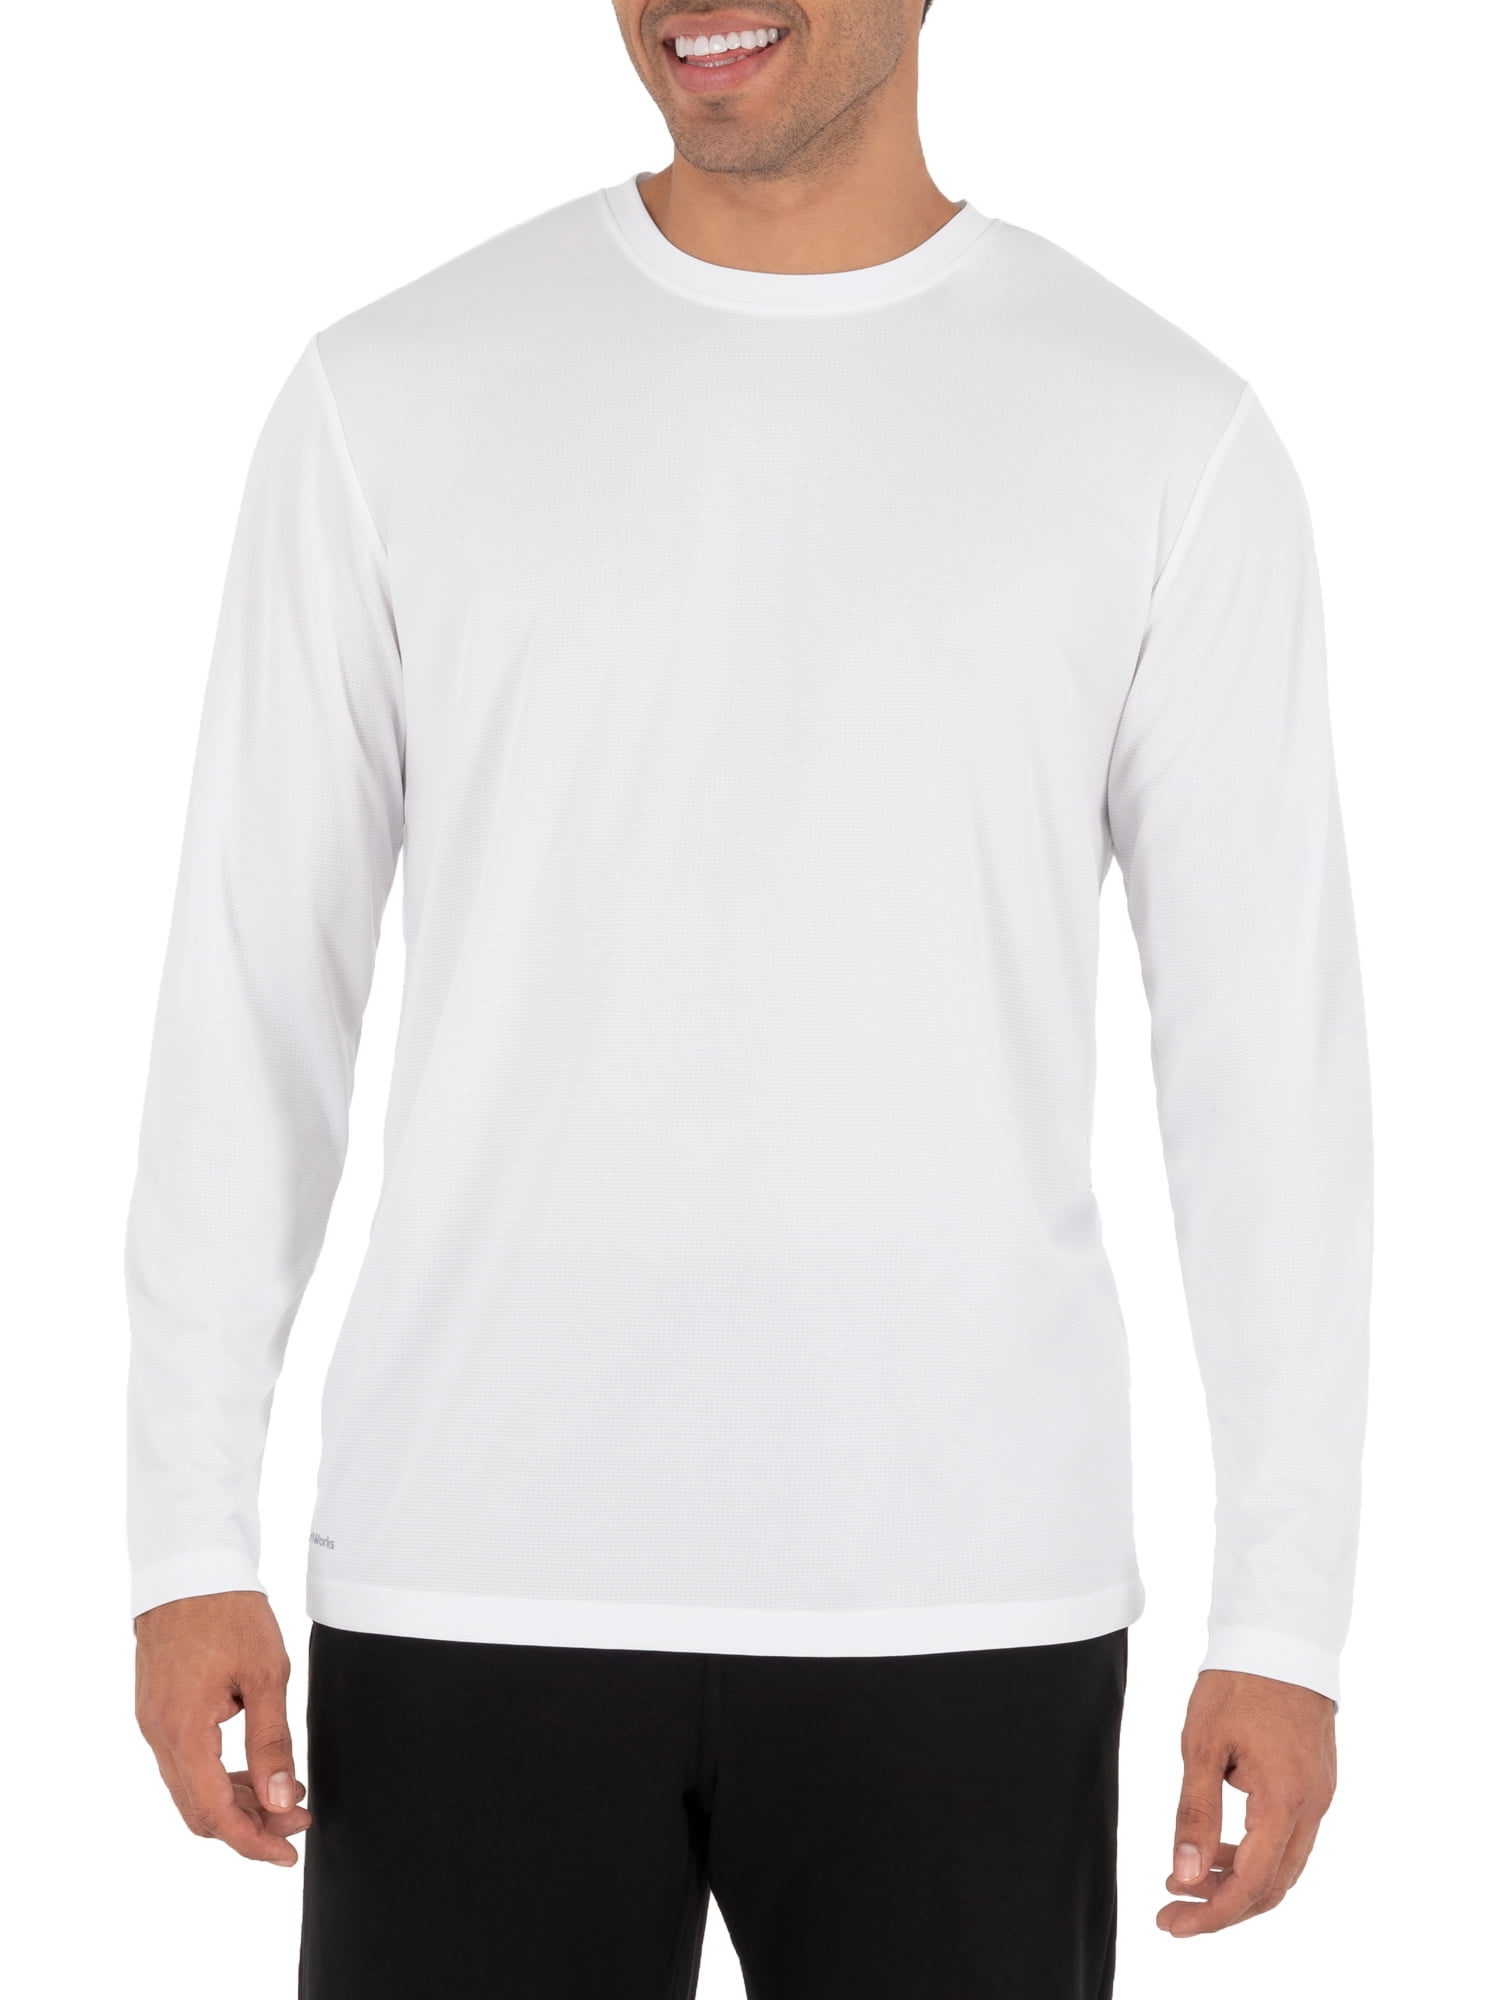 ACTIVE-DRY Plain Breathable Polyester Long Sleeve Sports T-Shirt Tshirt No Logo 